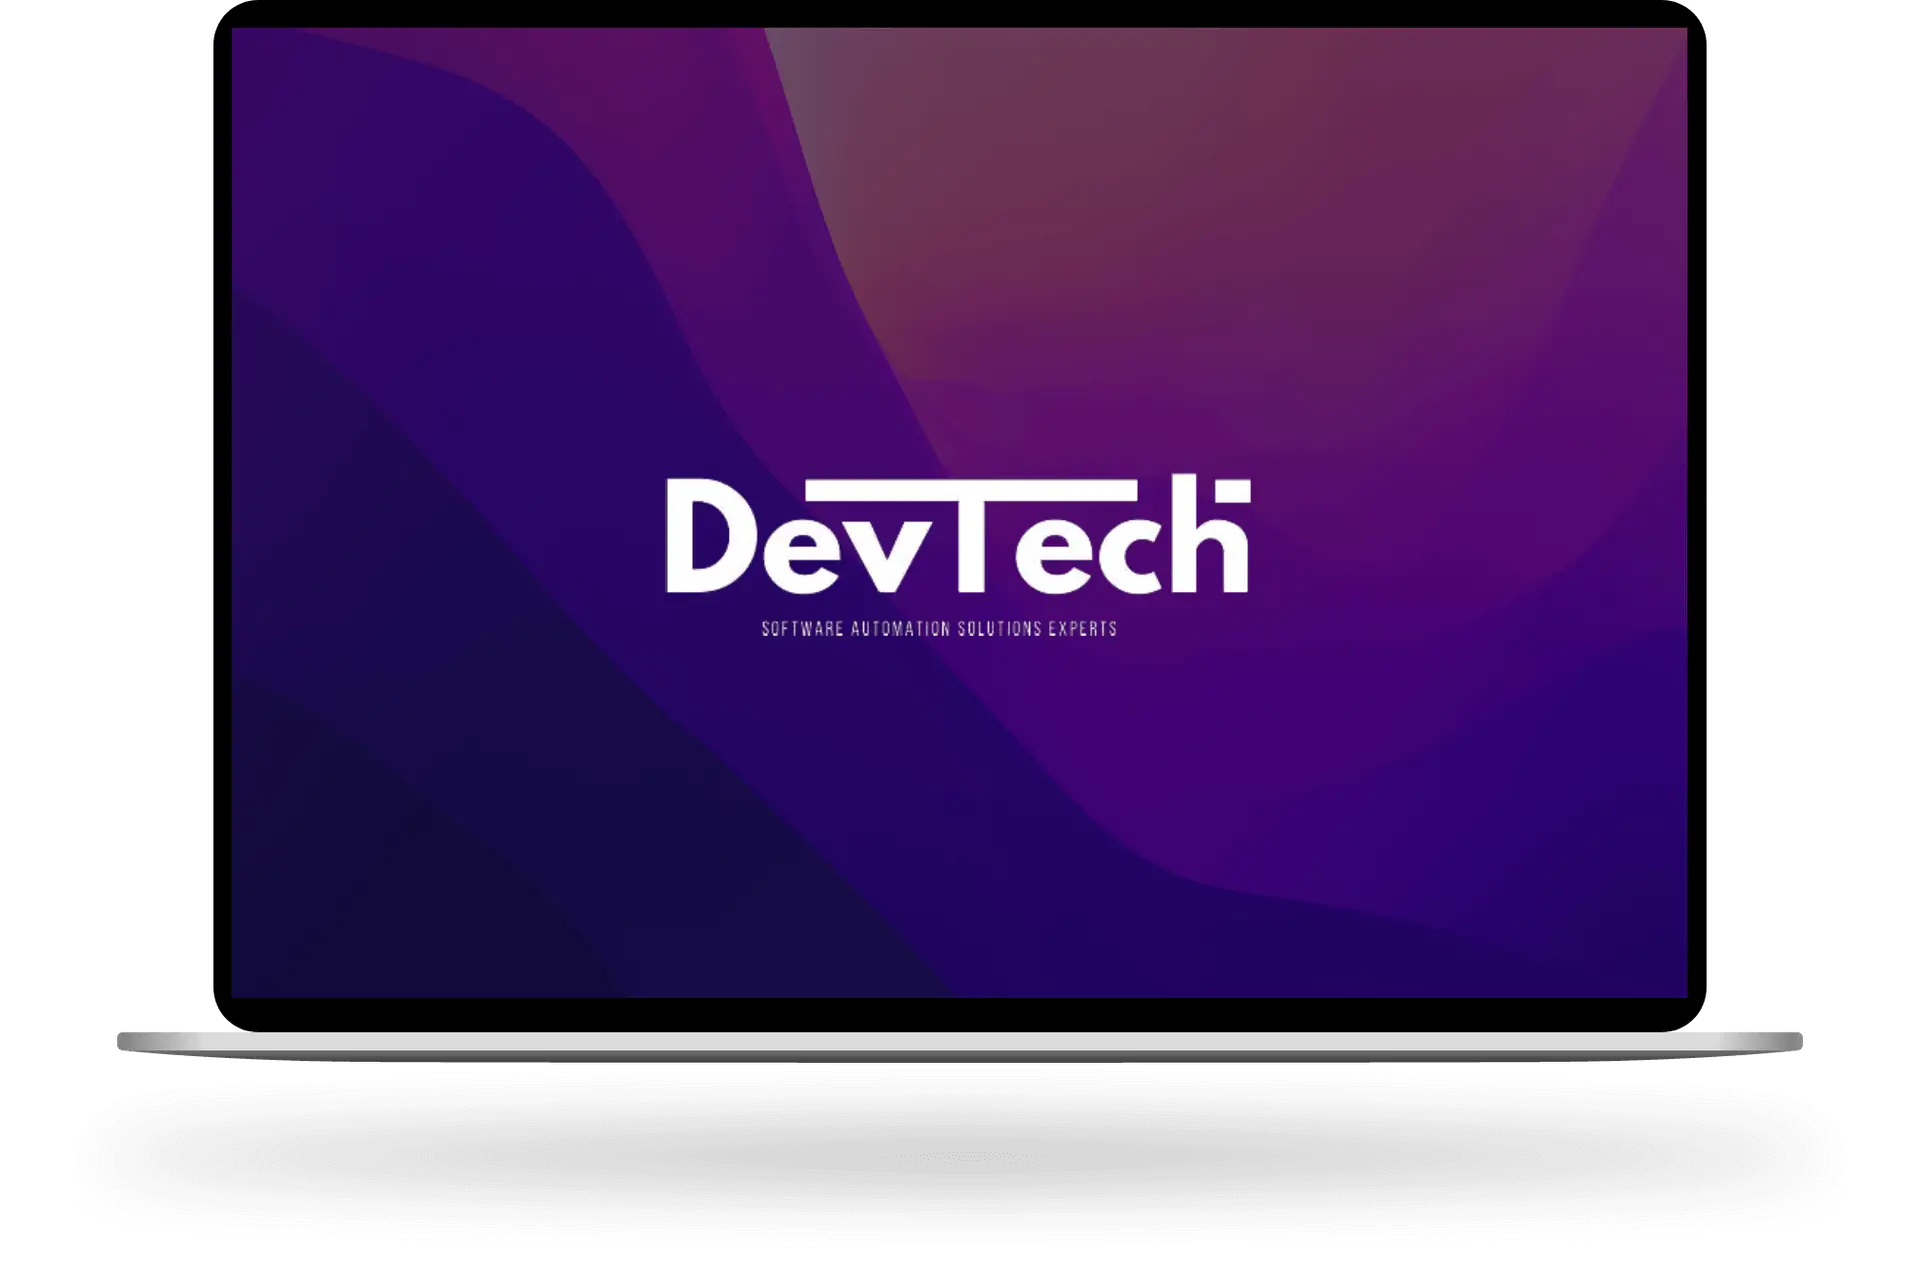 Software company - DevTech